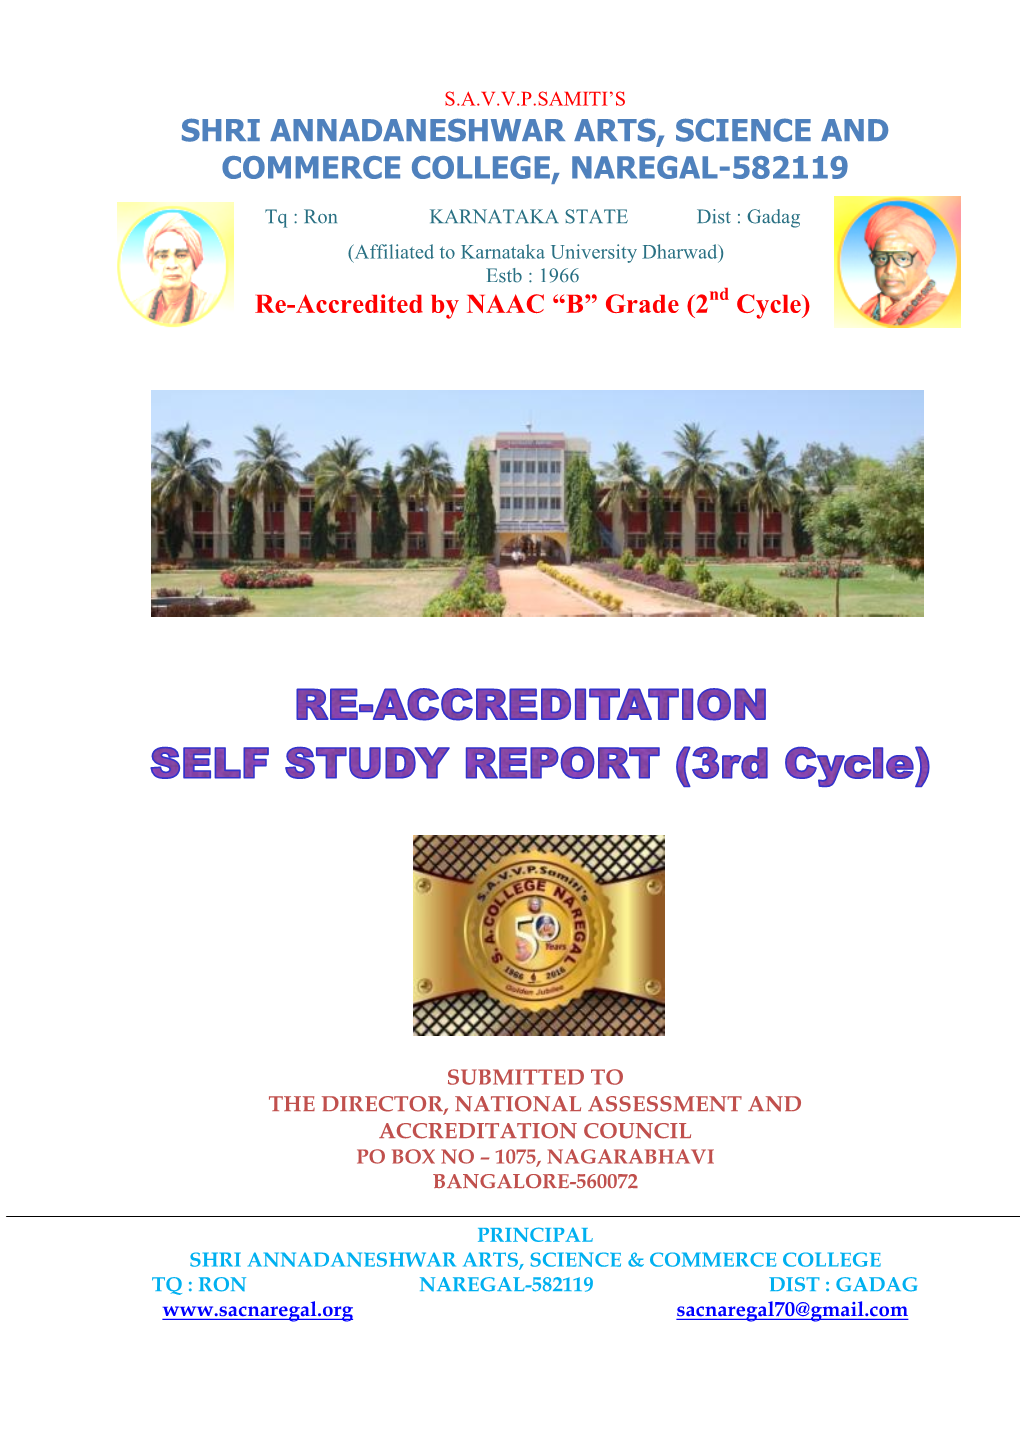 Shri Annadaneshwar Arts, Science and Commerce College, Naregal-582119